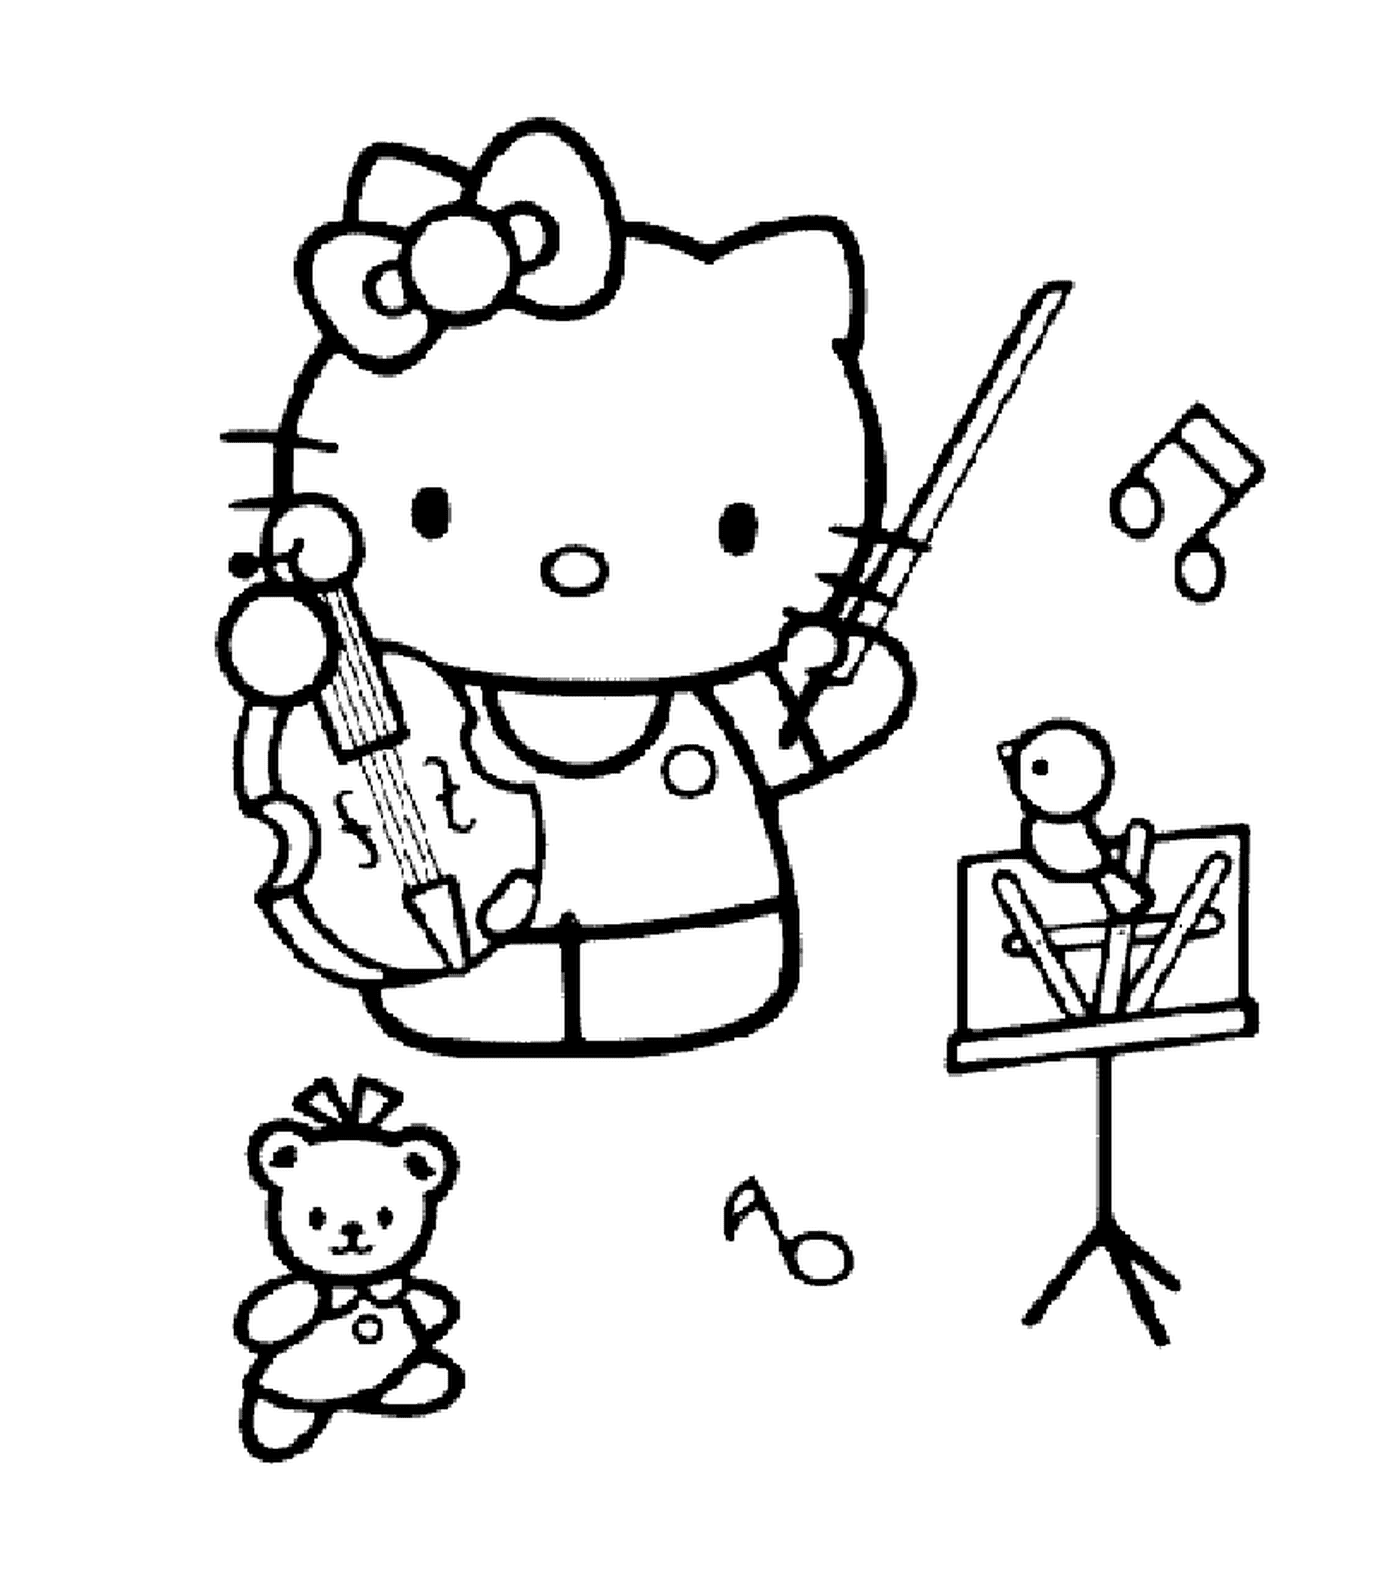  Hallo Kitty spielt ein Musikinstrument 